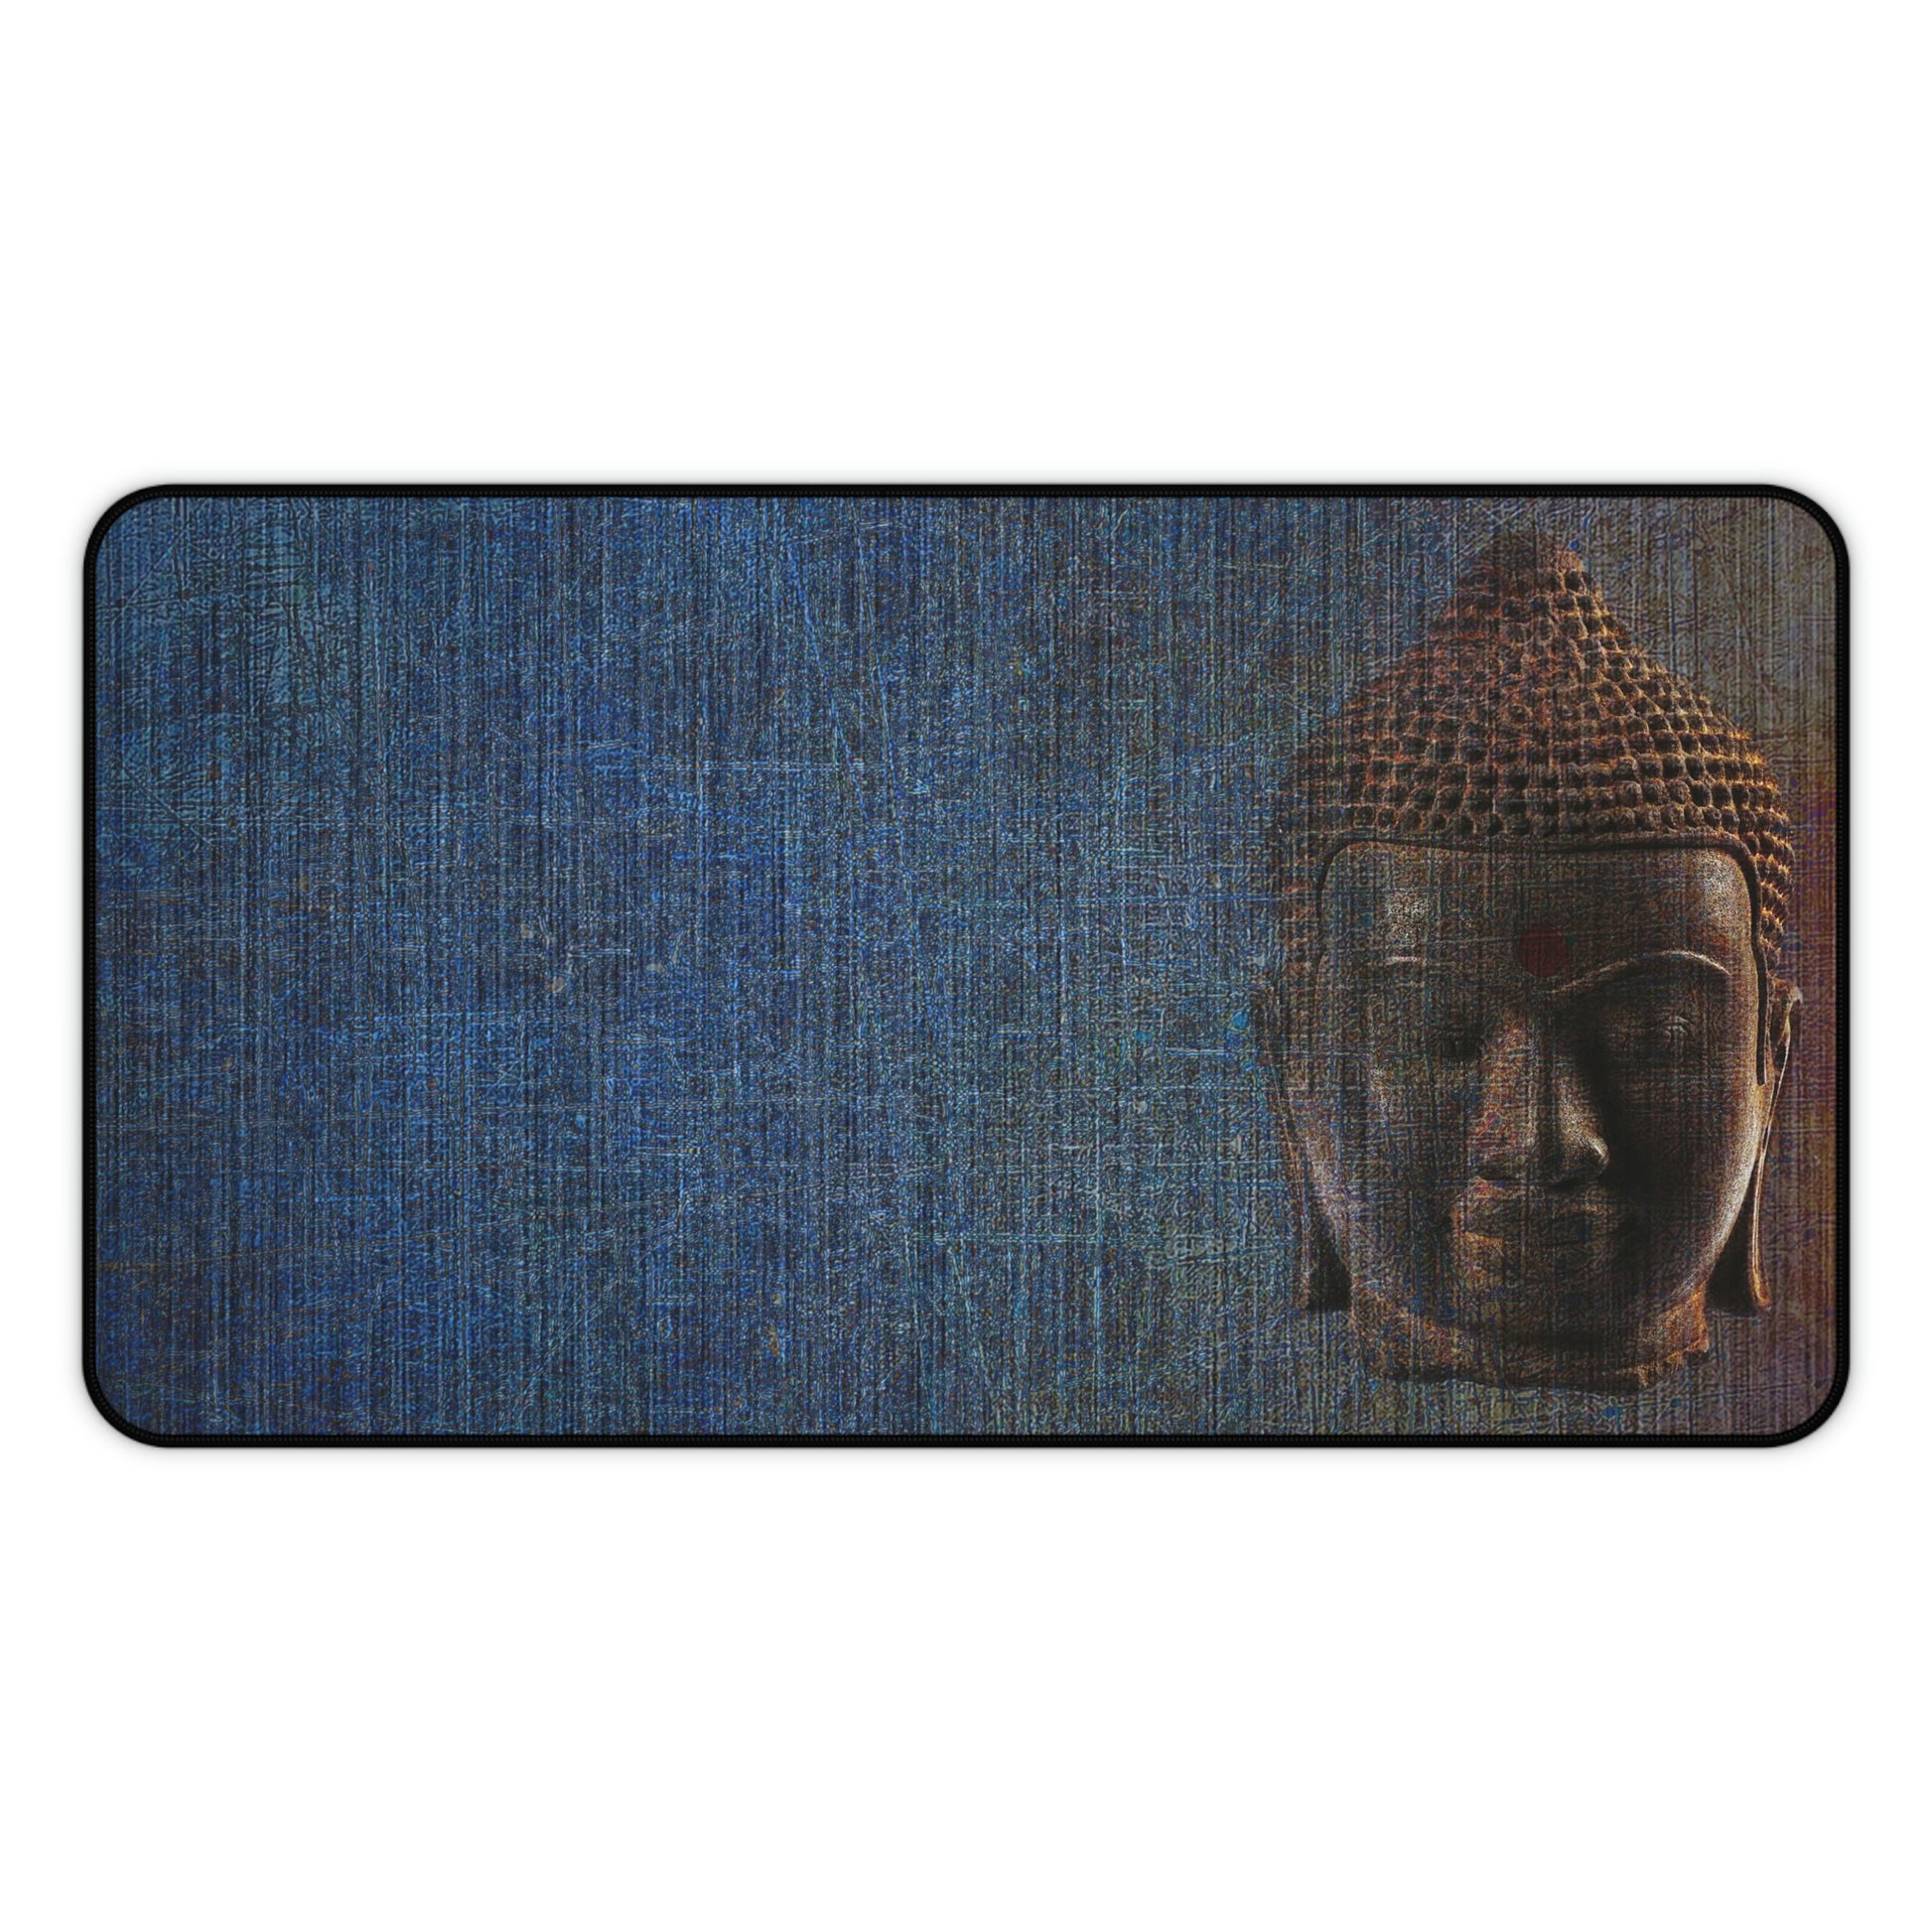 Buddha Themed Desk Accessories - Blue Buddha Head Neoprene Desk mat 12 by 22